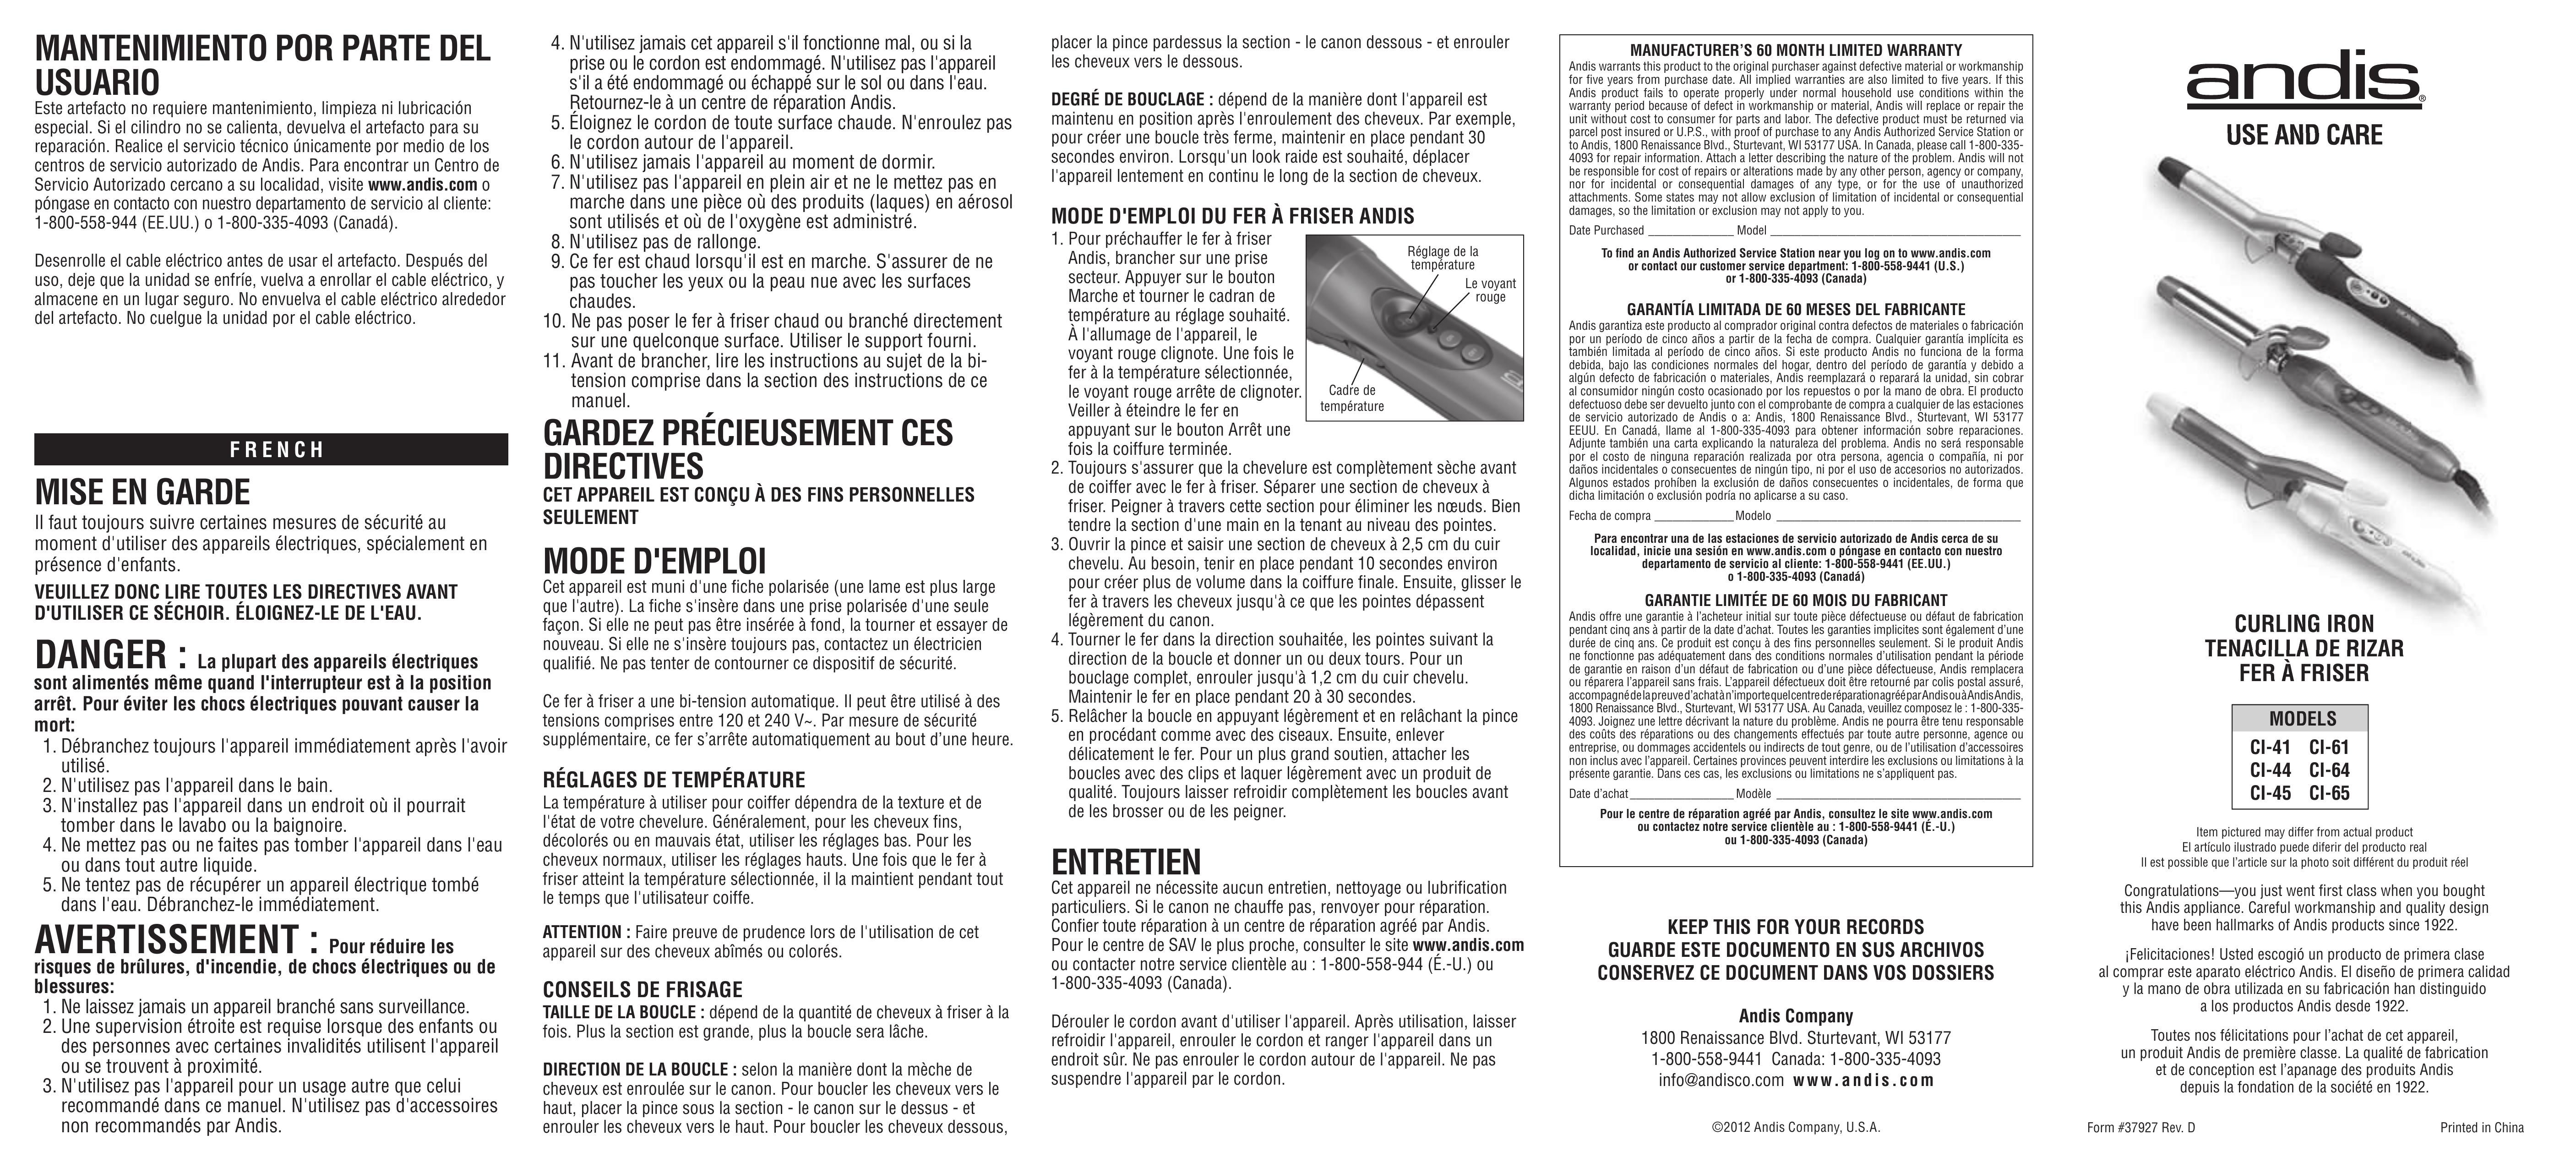 Andis Company CI-65 Styling Iron User Manual